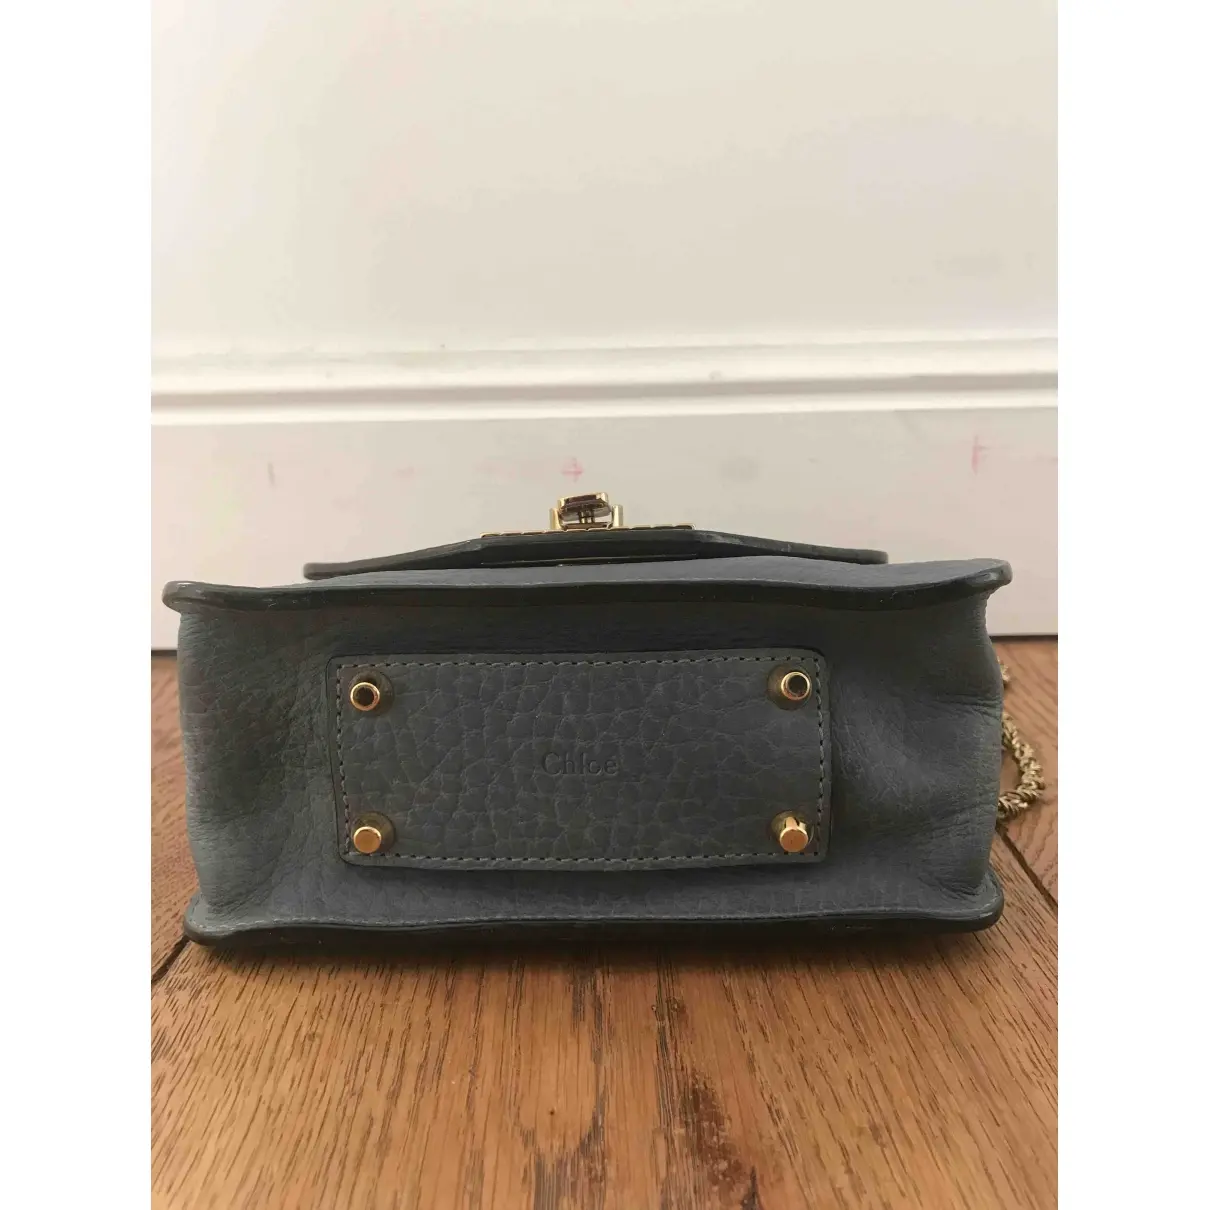 Buy Chloé Sally leather handbag online